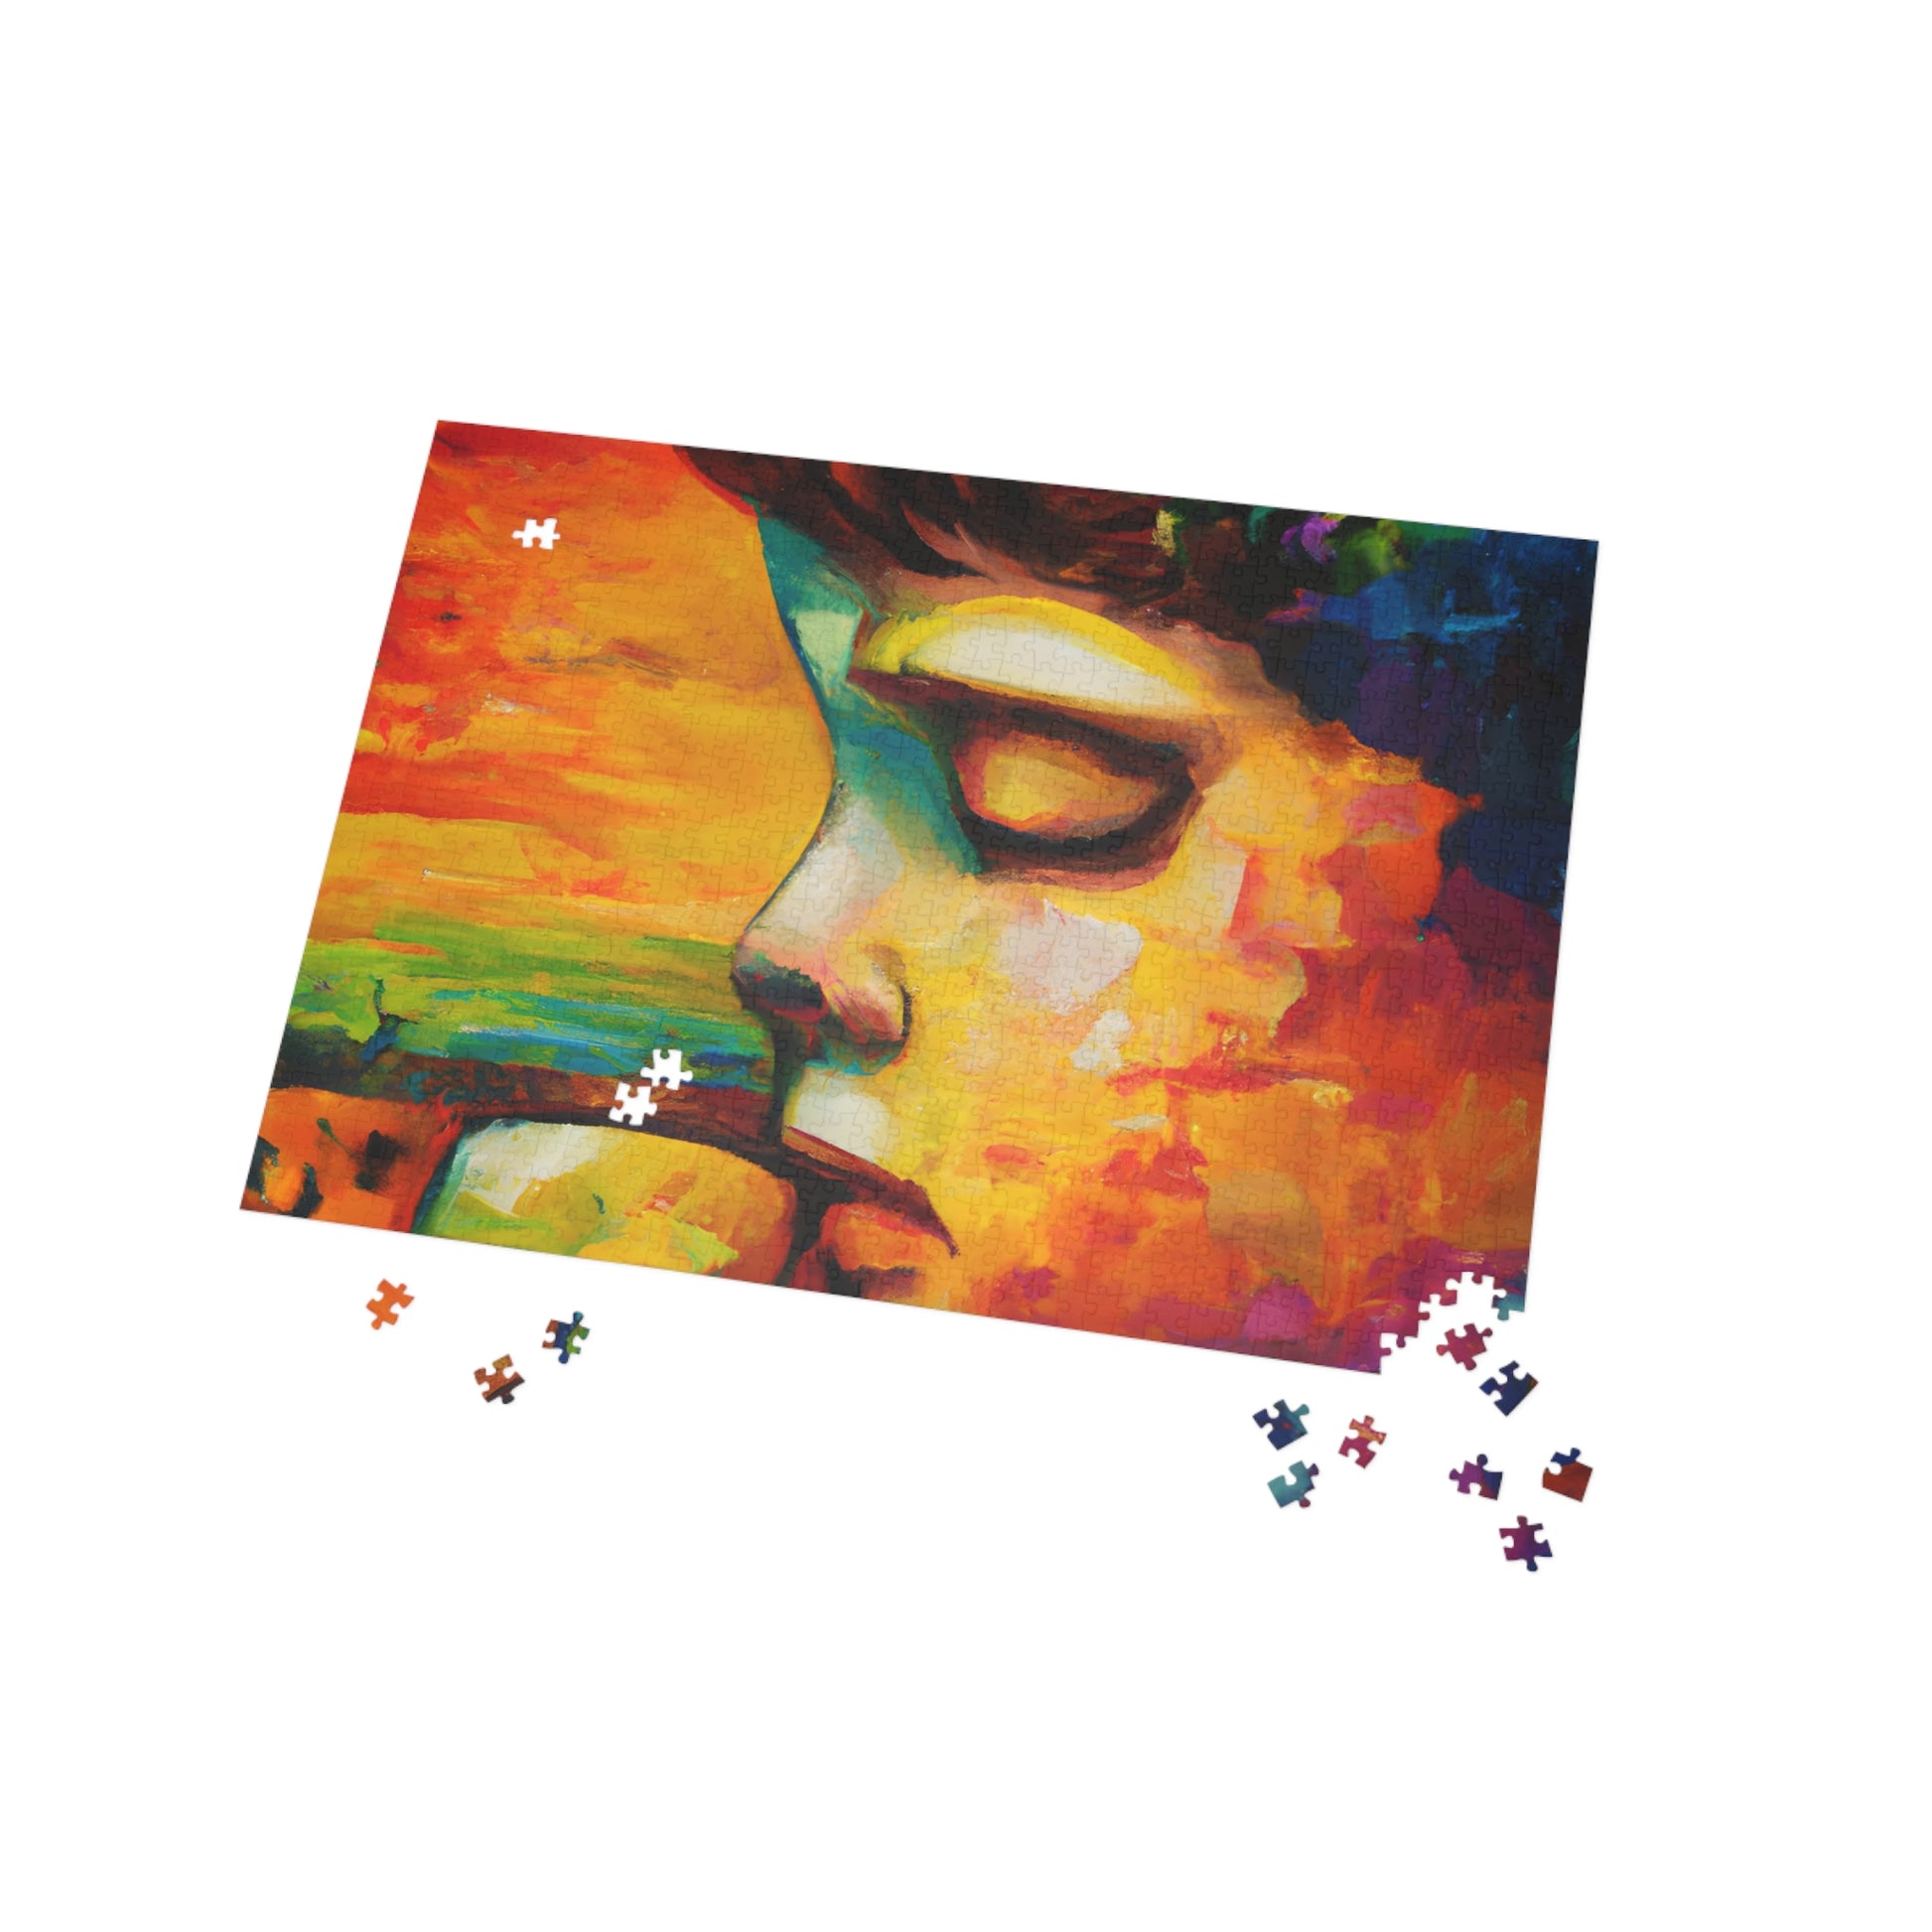 Luminaire - LGBTQ-Inspired Jigsaw Puzzle